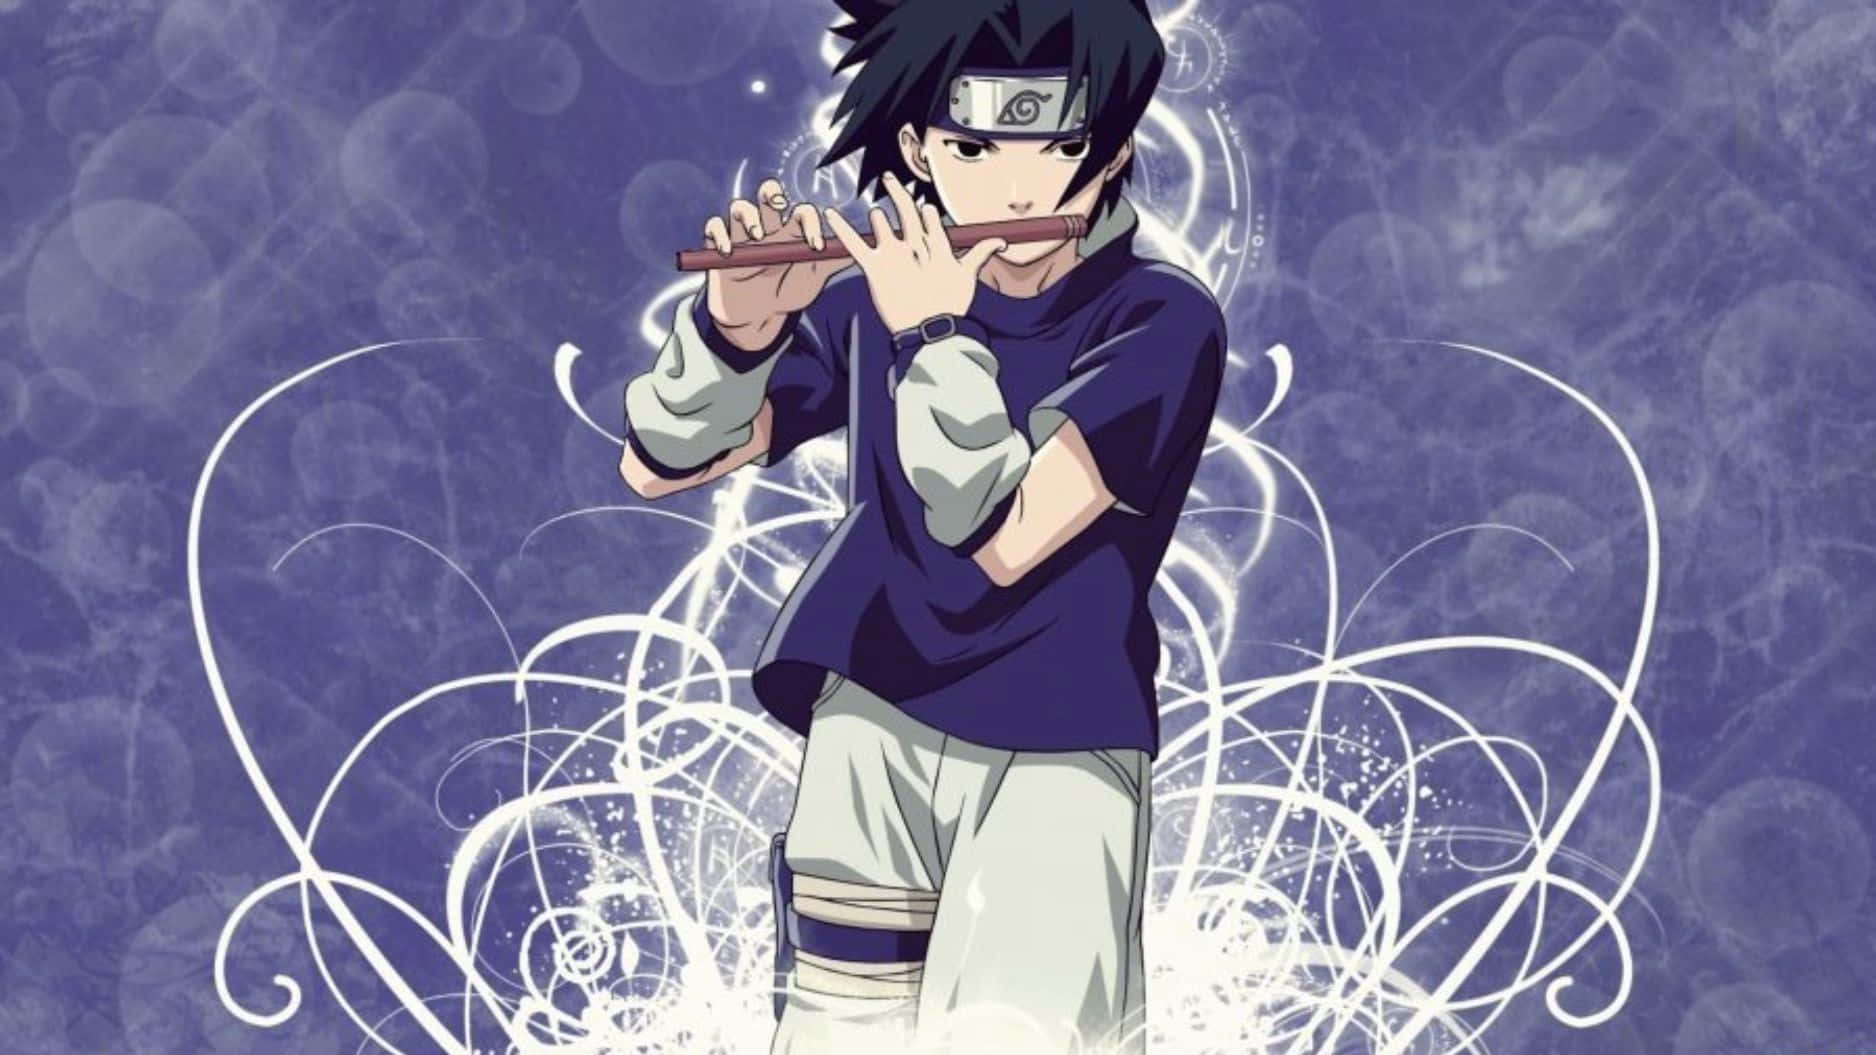 Blue Sasuke, ready to challenge destiny Wallpaper